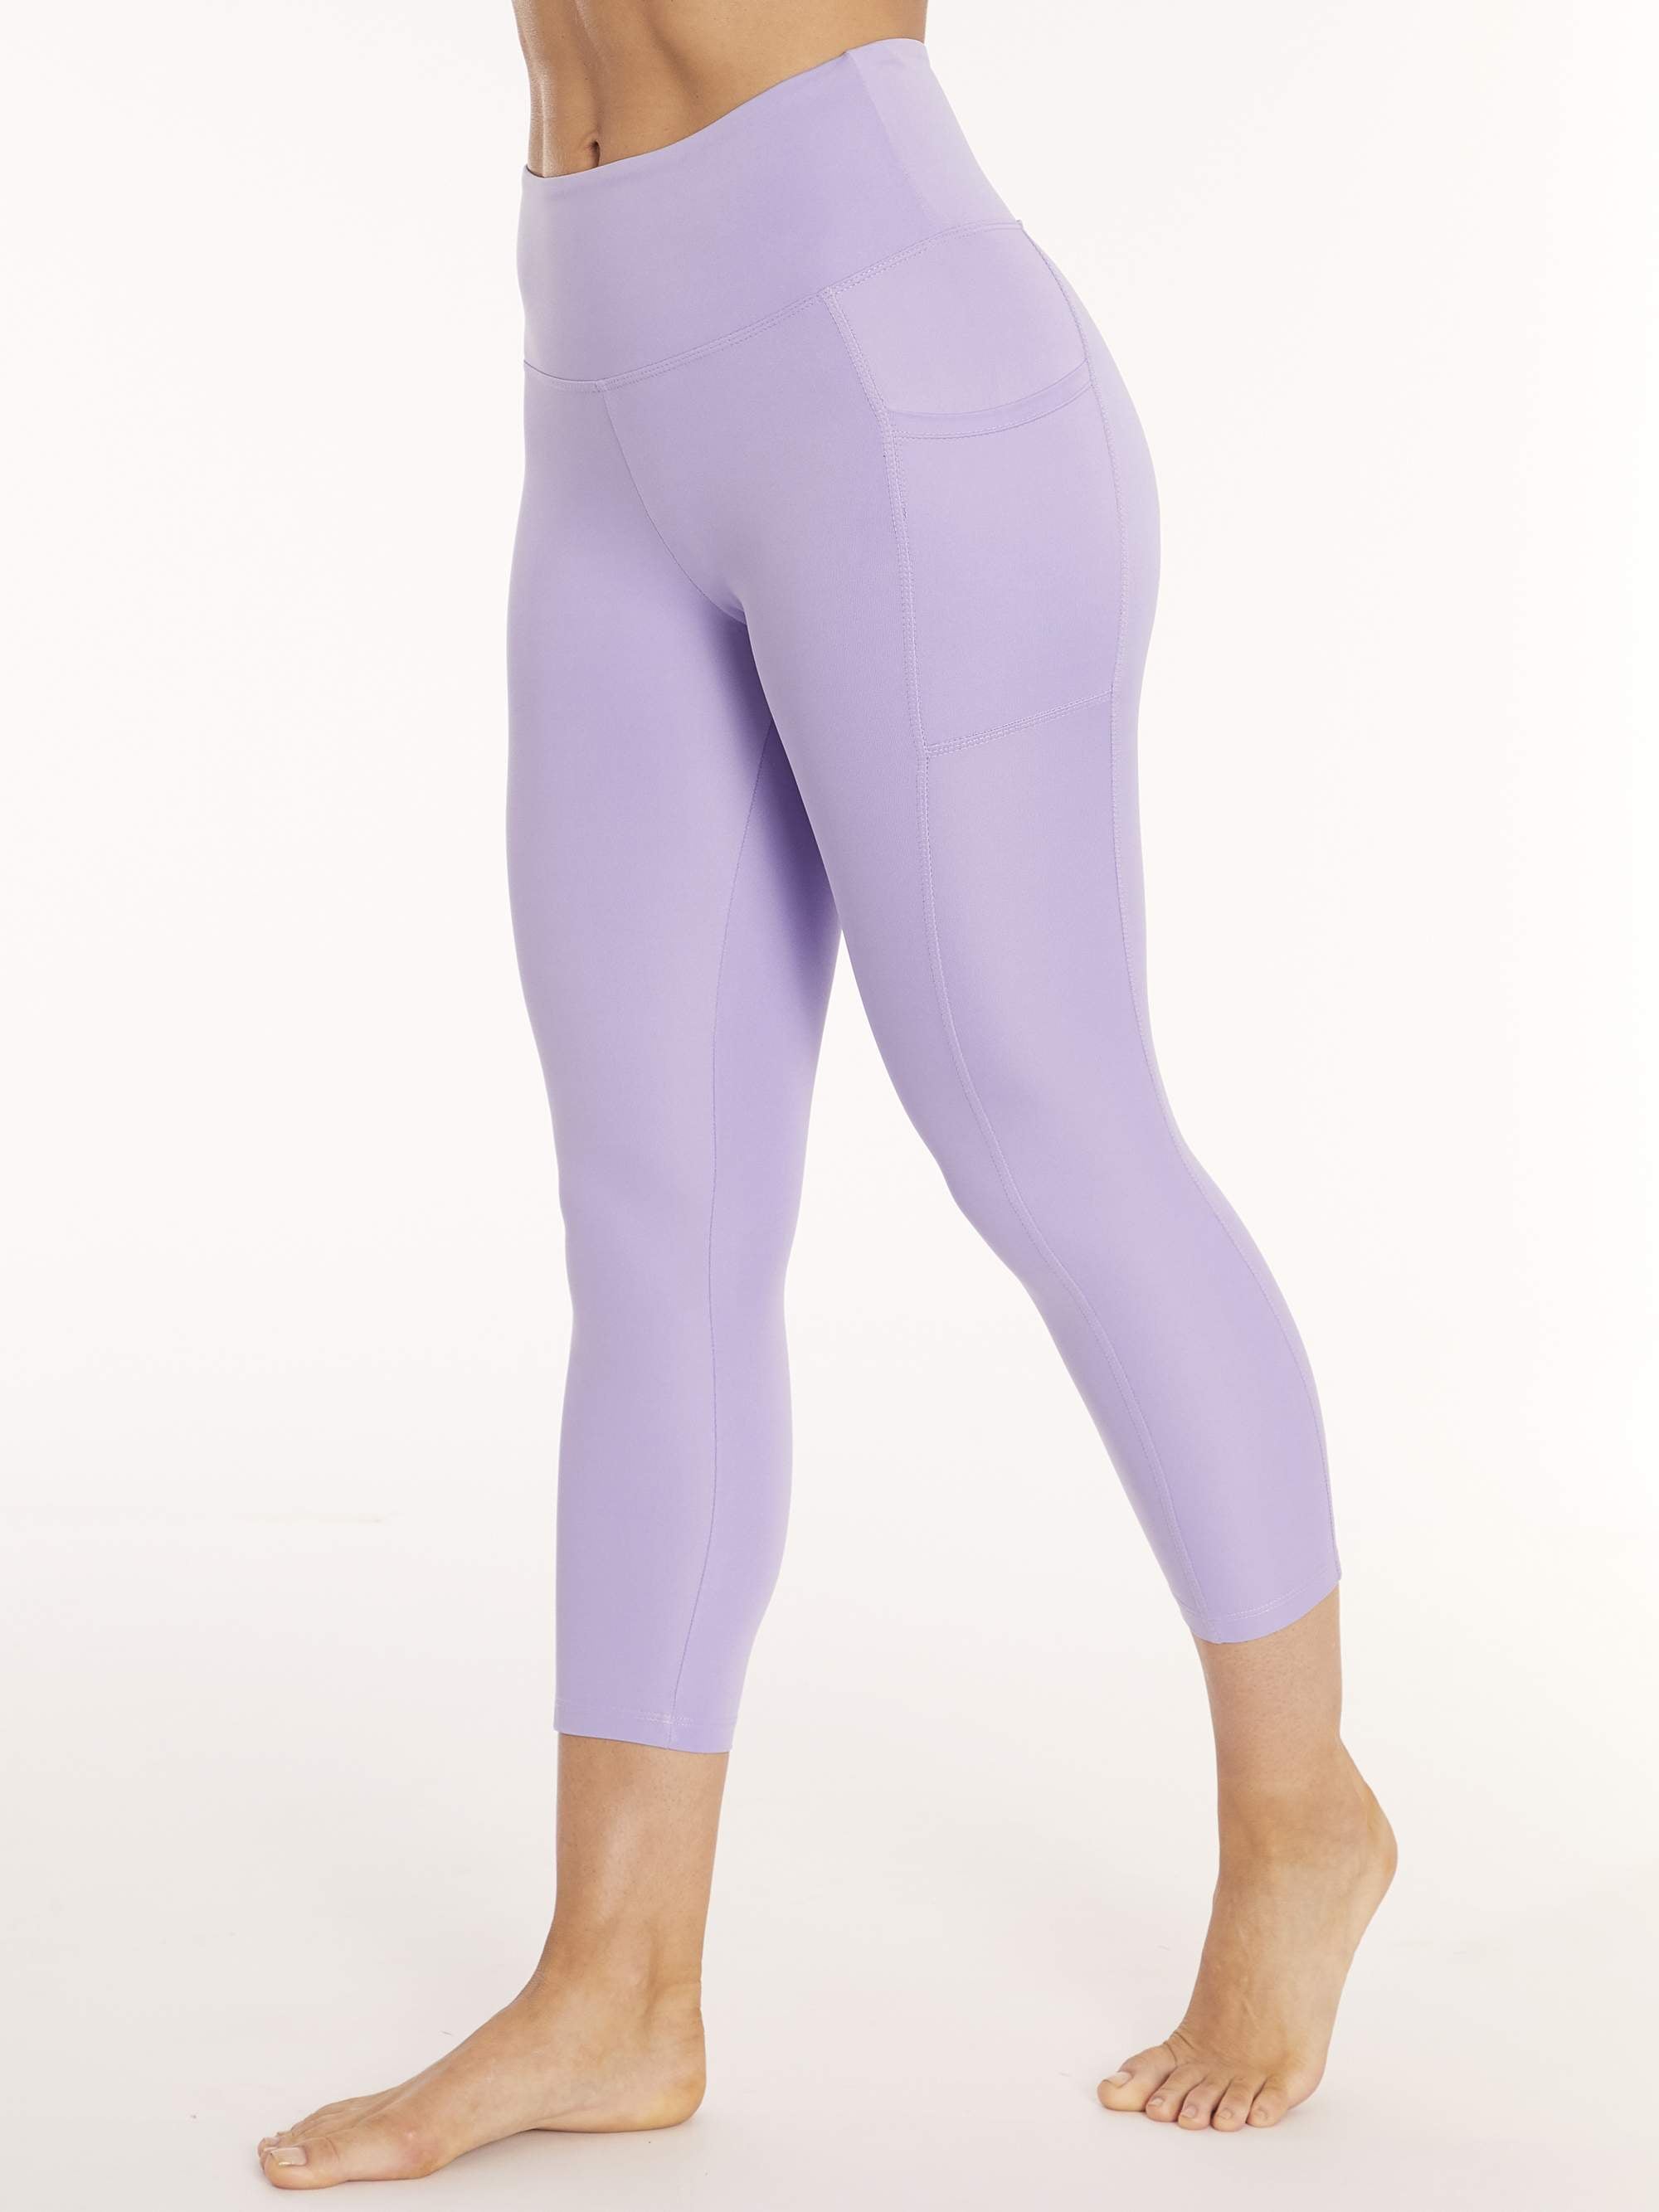 Podplug Capri Pants for Women, Women's Mesh Stitched Capris Sports Yoga  Stretch Pants Running High Waist Leggings - Walmart.com